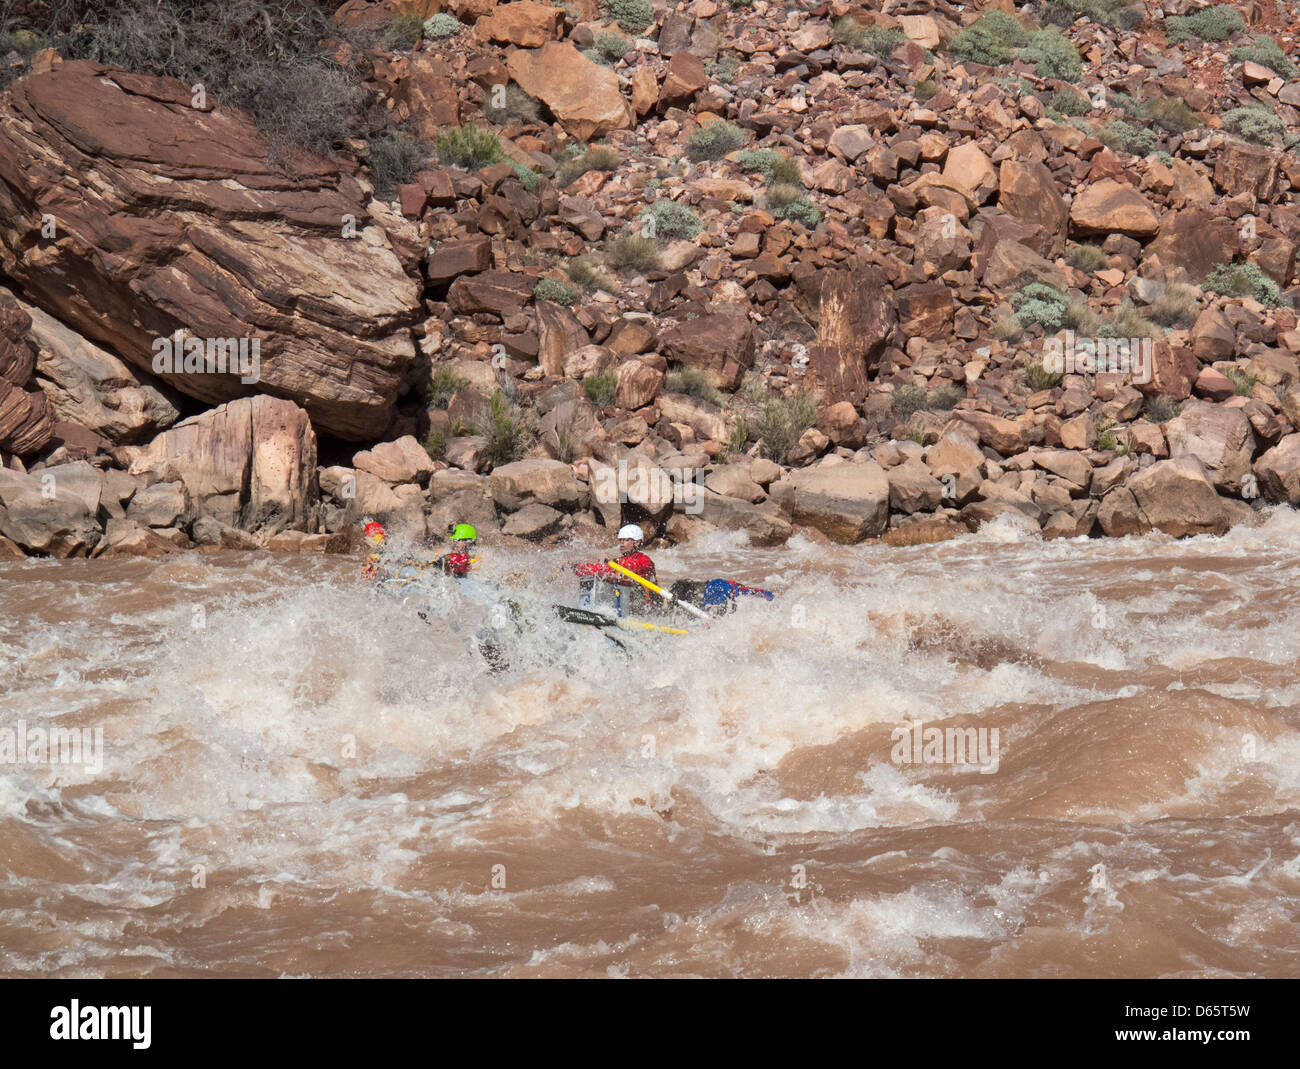 Grand Canyon National Park, Arizona - A raft navigates Hance Rapids on the Colorado River. Stock Photo